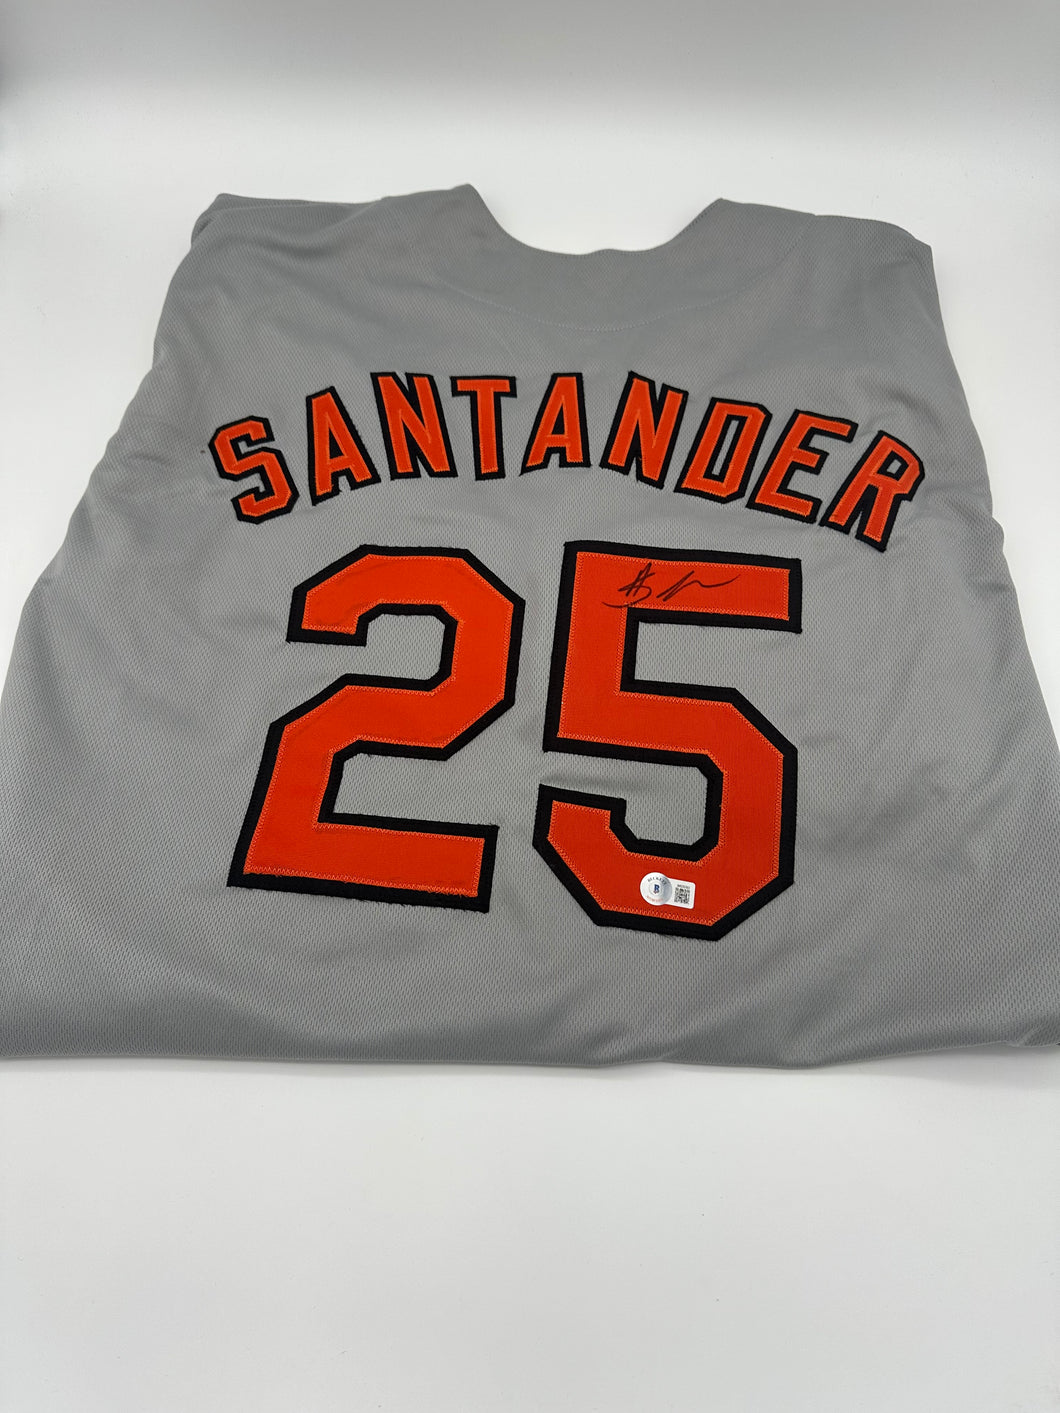 Anthony Santander signed custom jersey